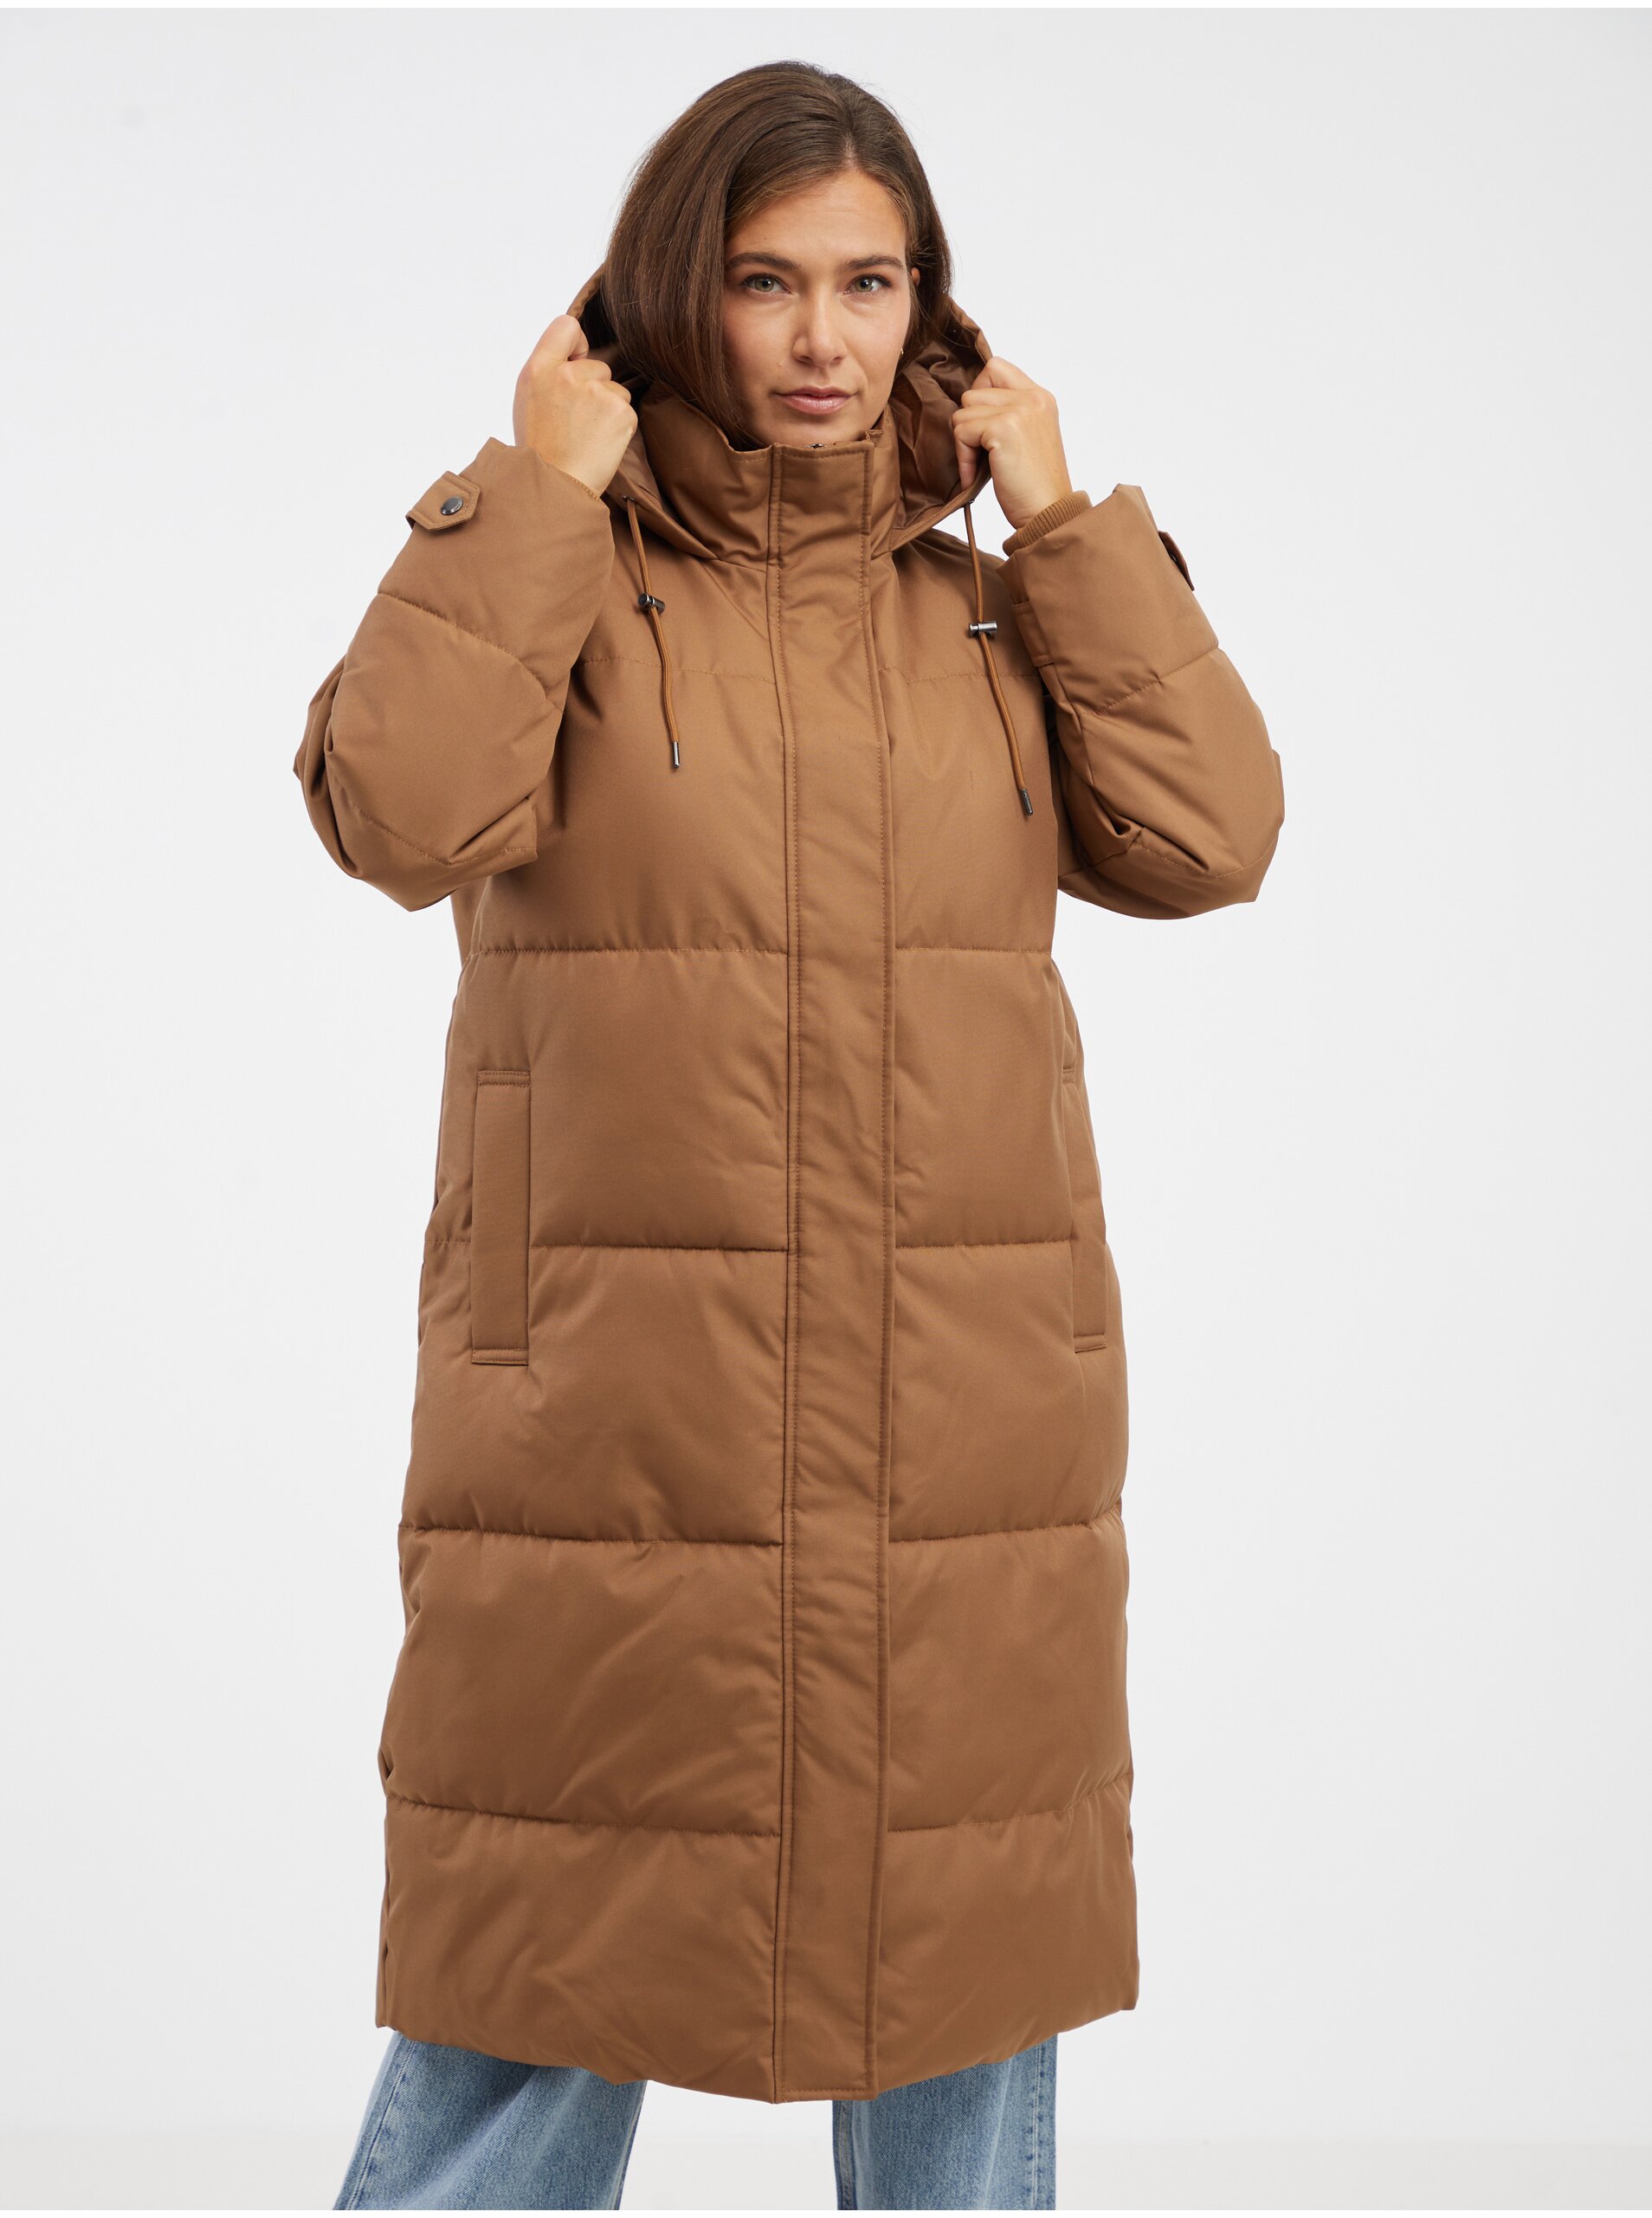 Lacno Hnedý dámsky prešívaný zimný kabát ONLY Irene